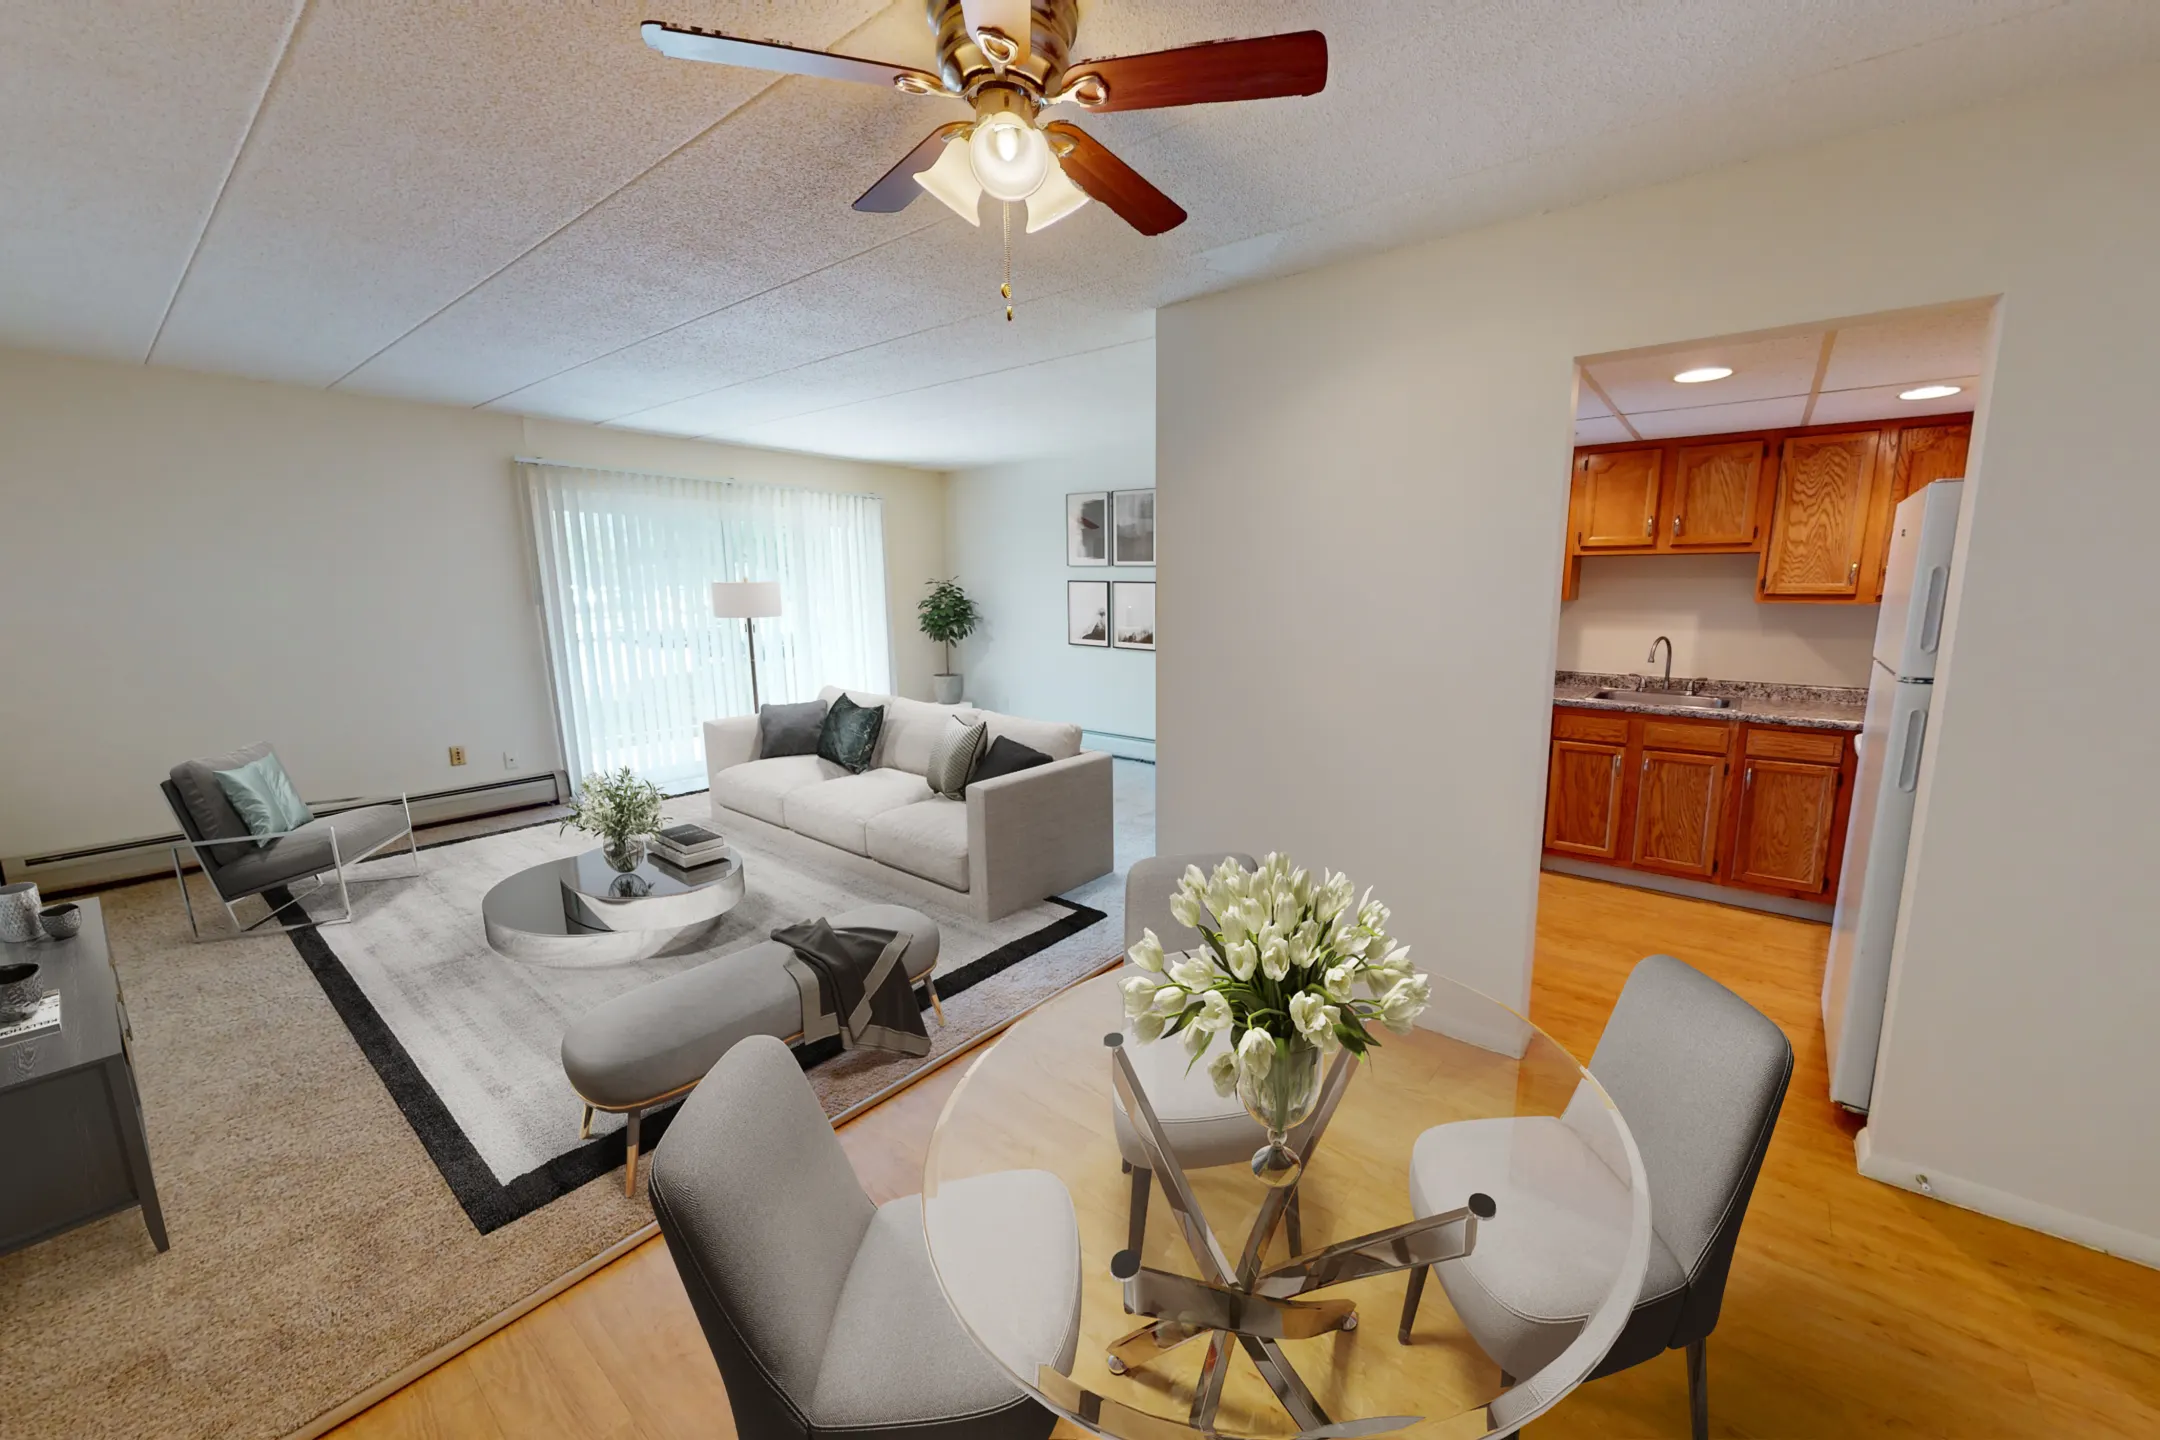 Living Room - Vantage Pointe West Apartments - Cincinnati, OH